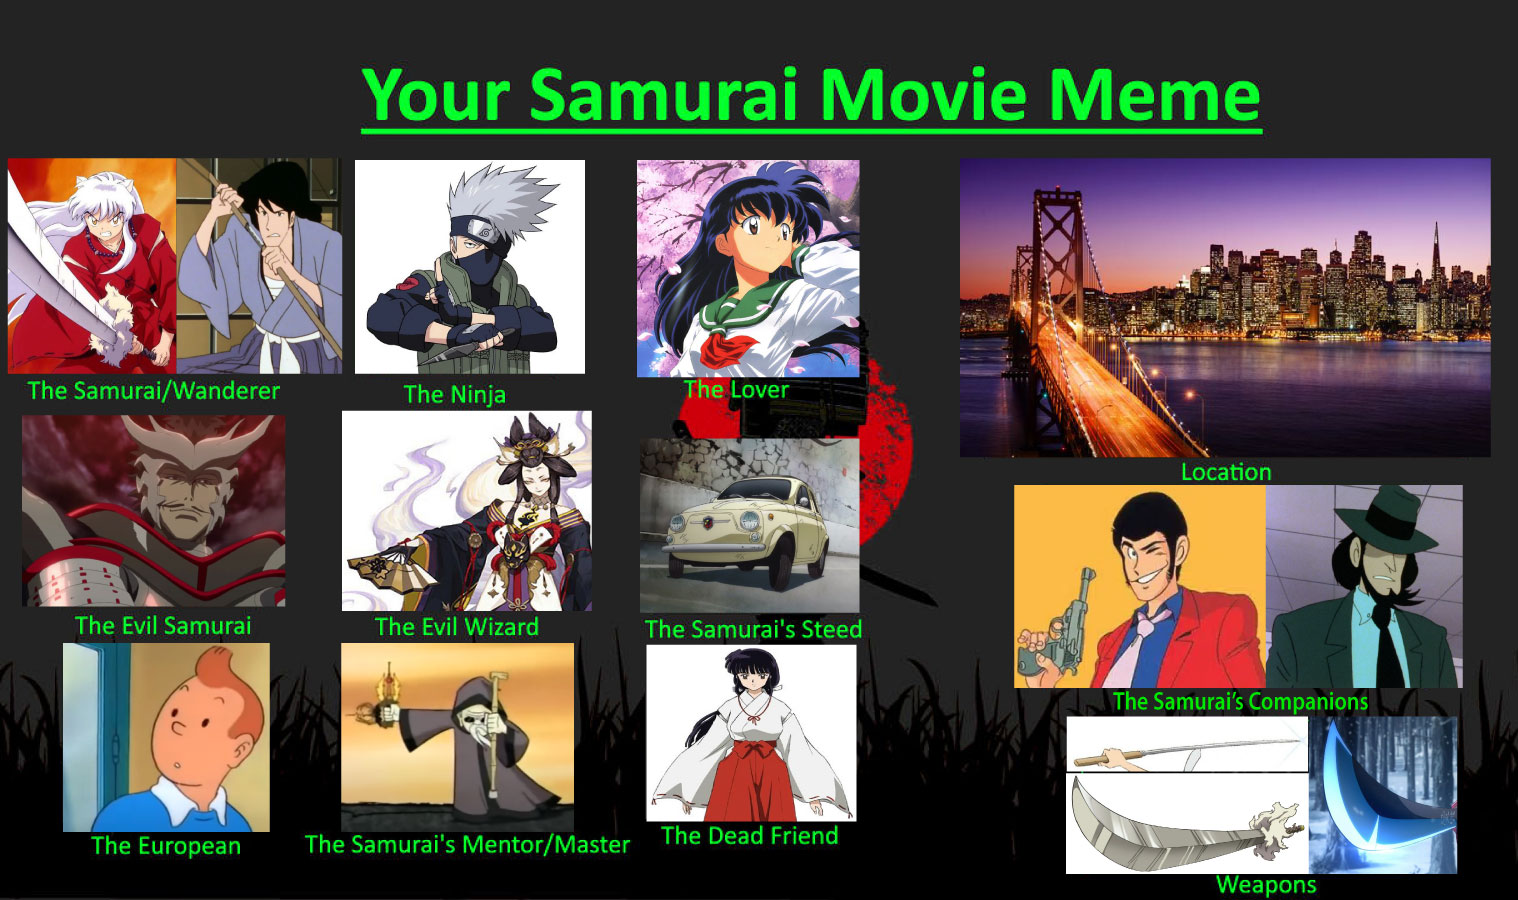 My Samurai Movie Meme by TandP on DeviantArt